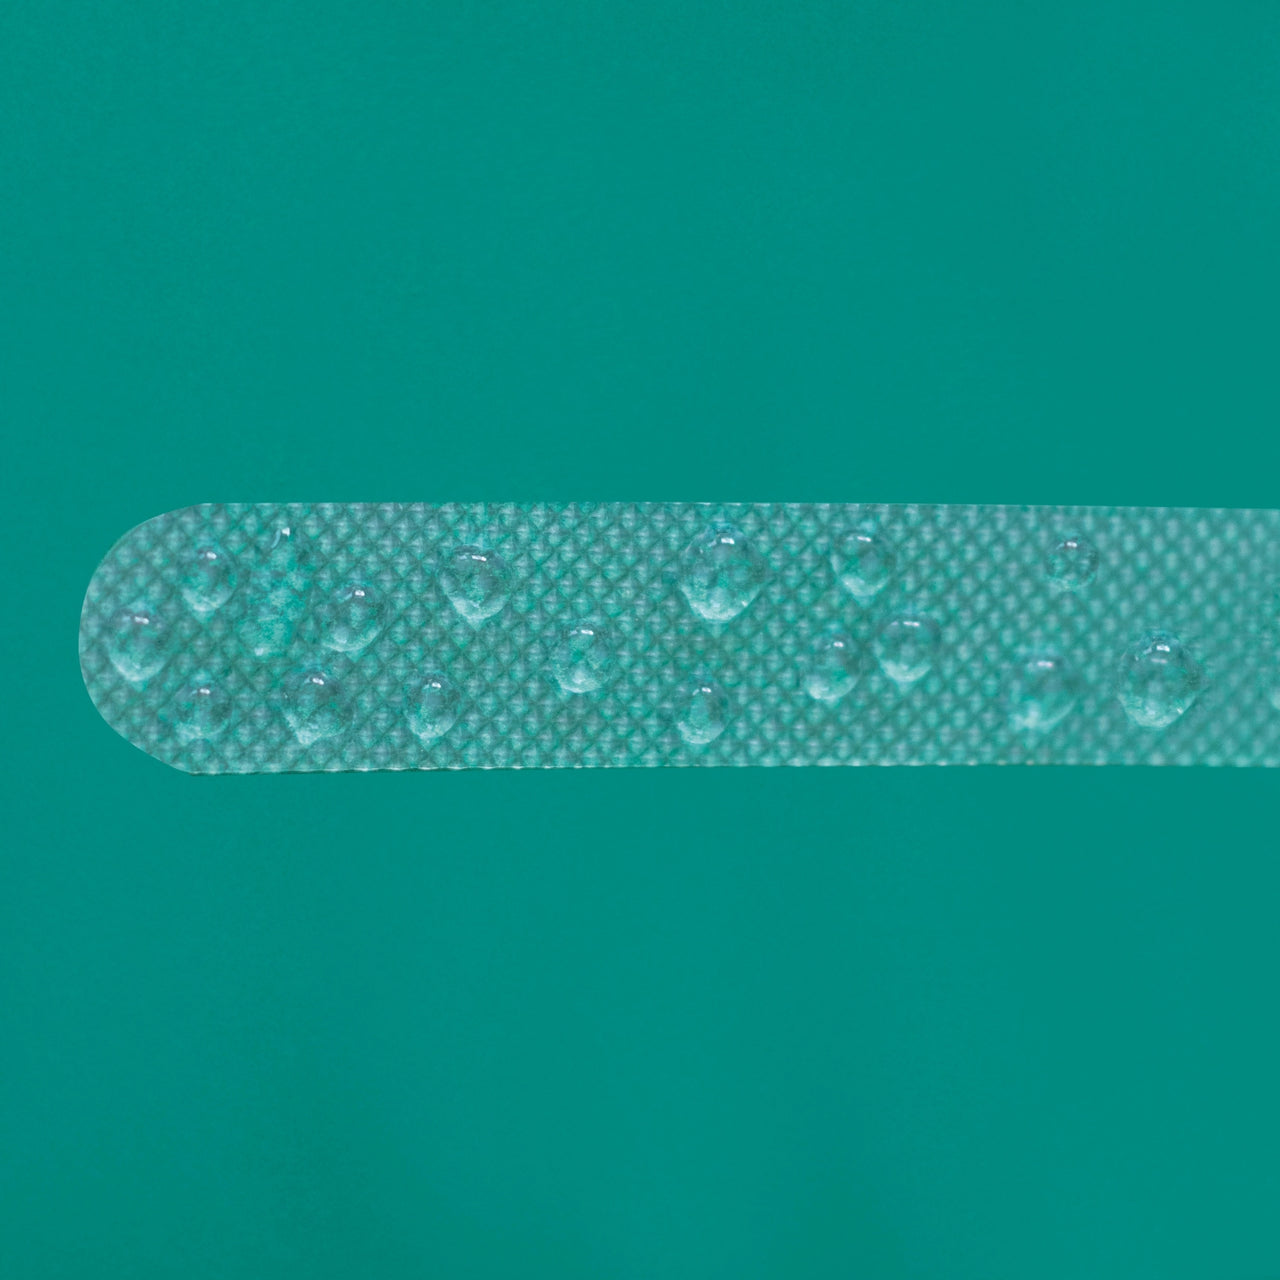 Clear strips anti slip grip with water droplets showing it's waterproof